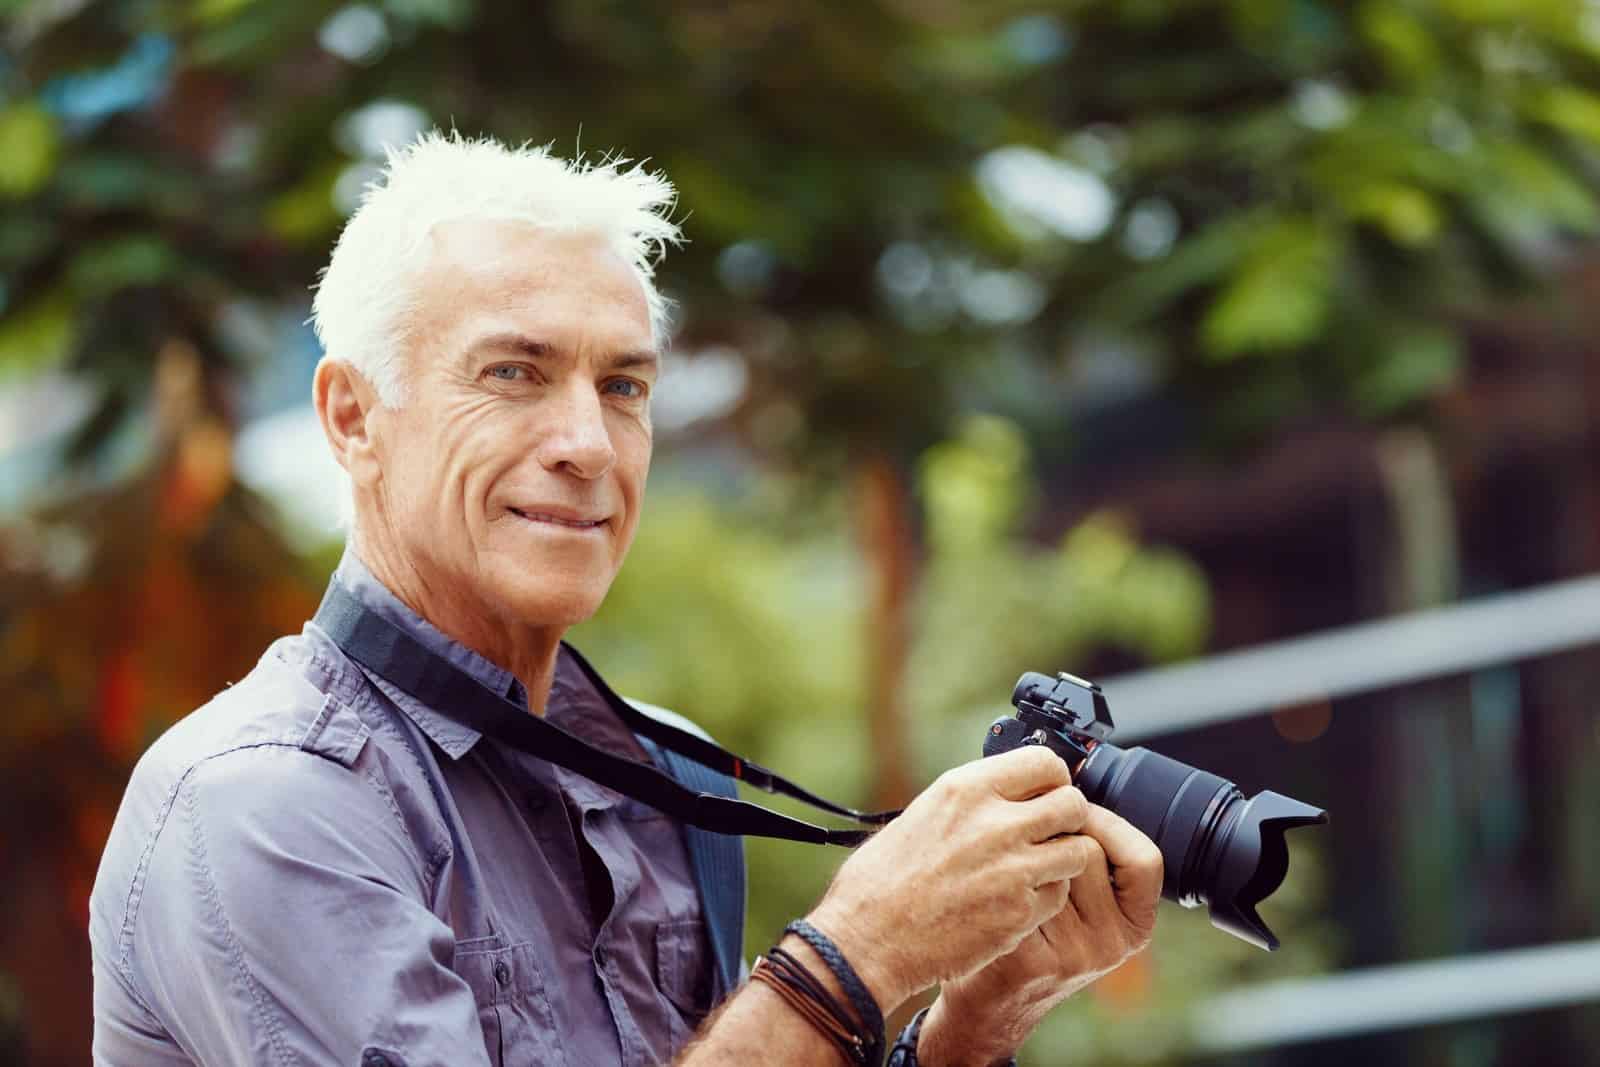 Retirement savings senior with camera